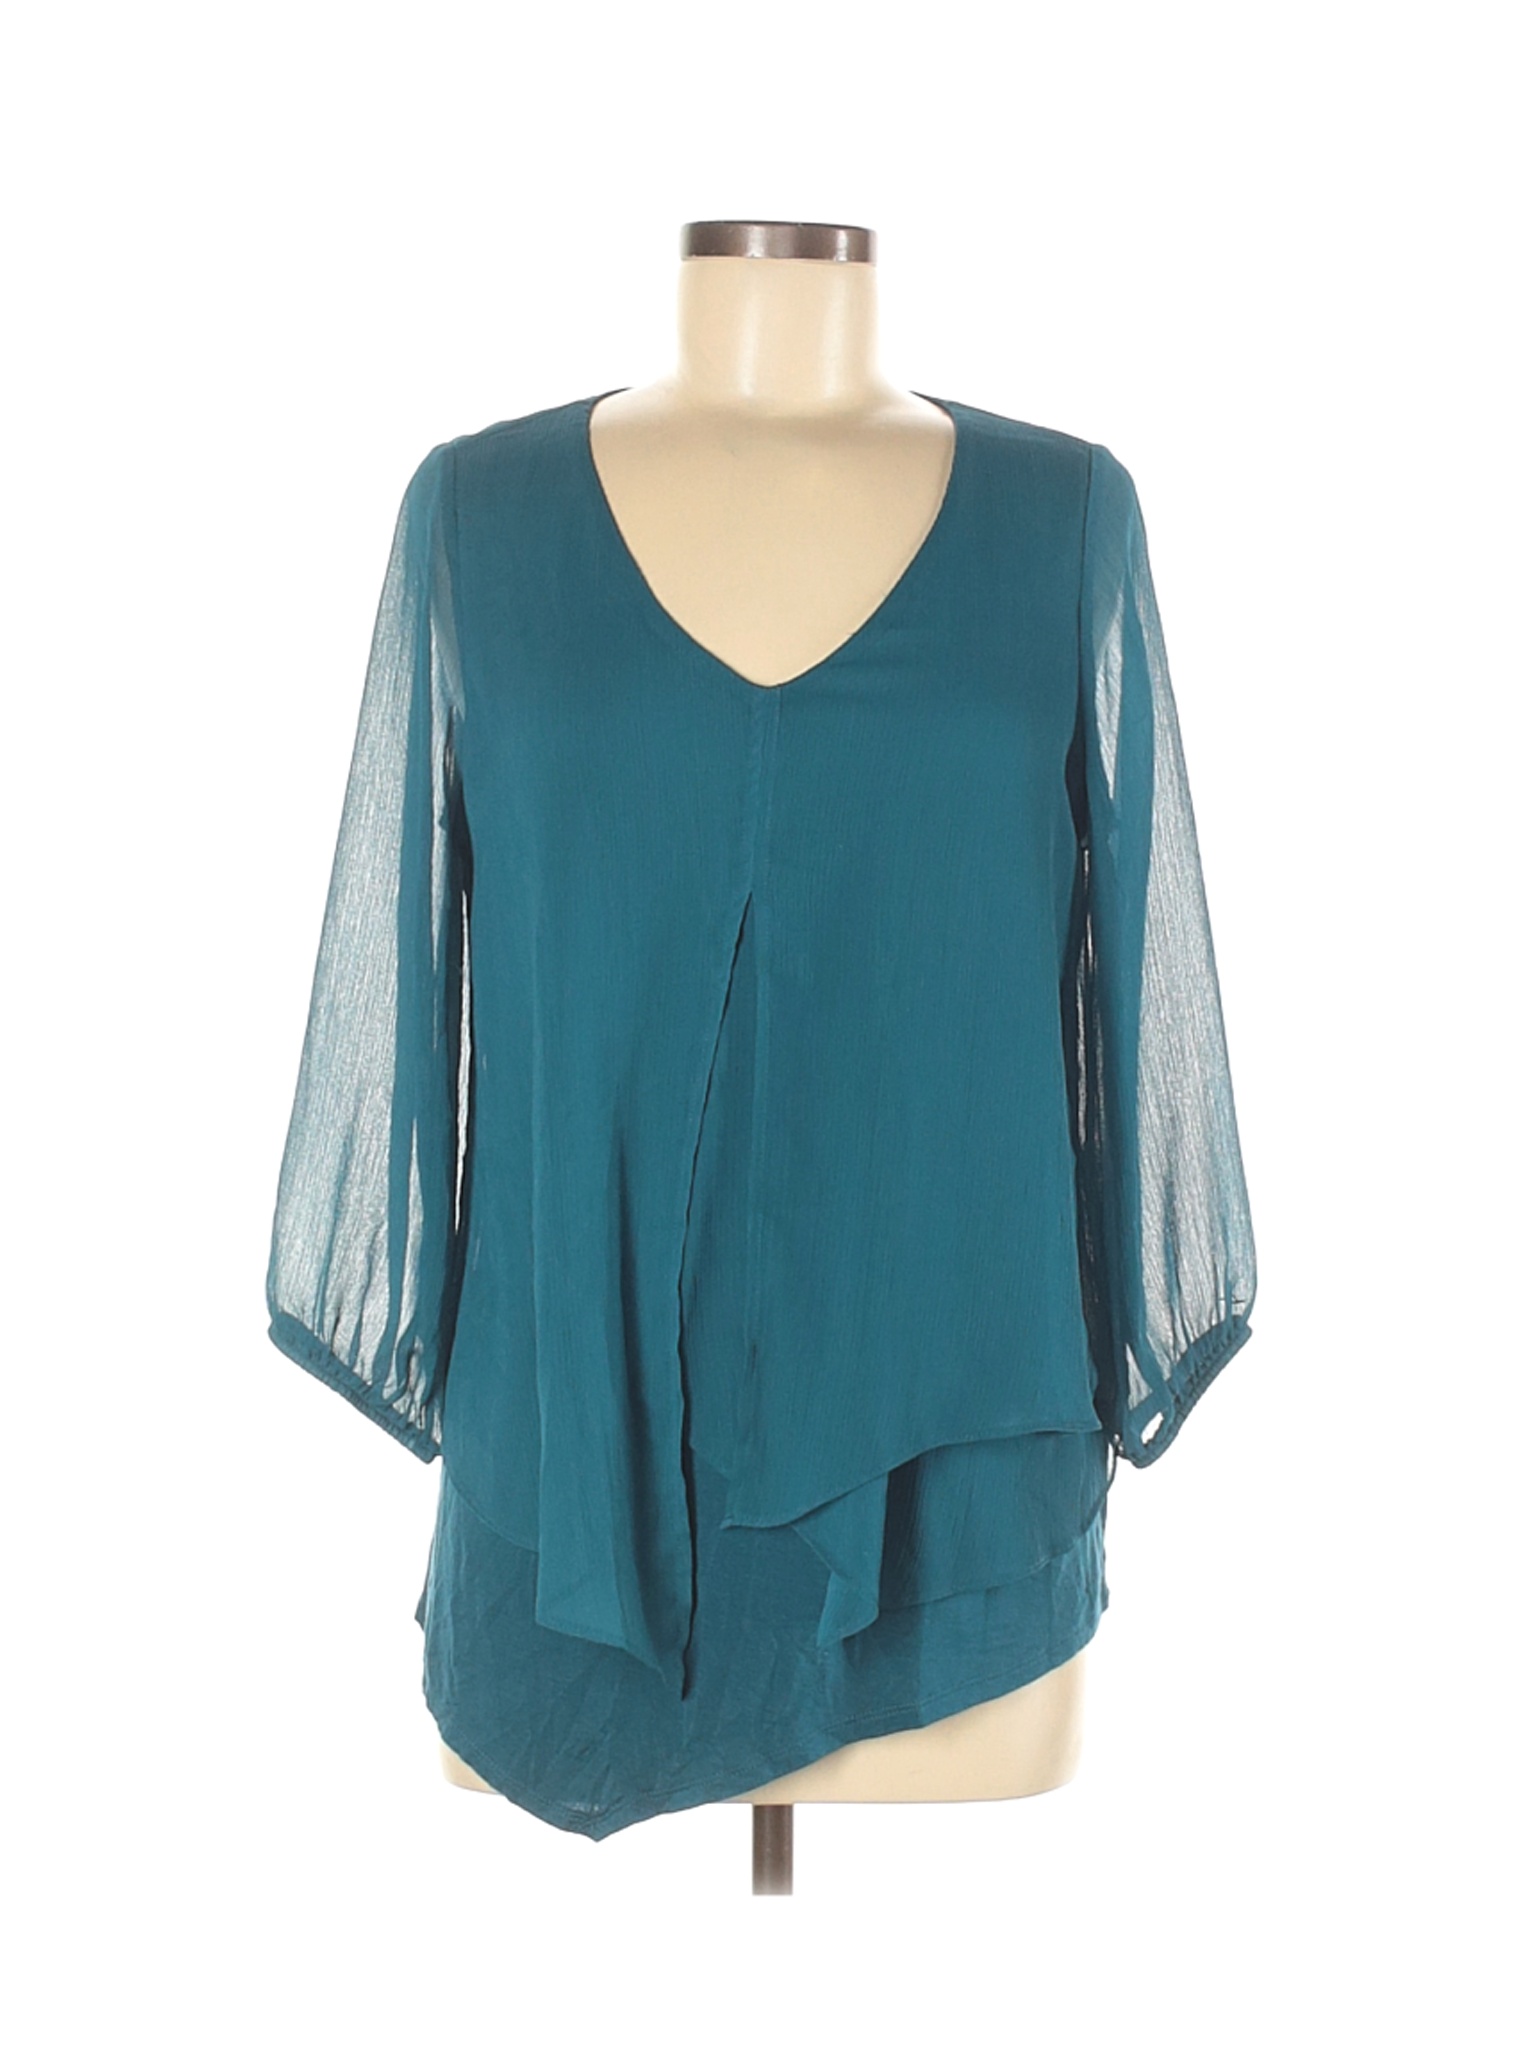 Apt. 9 Women Green 3/4 Sleeve Blouse M | eBay